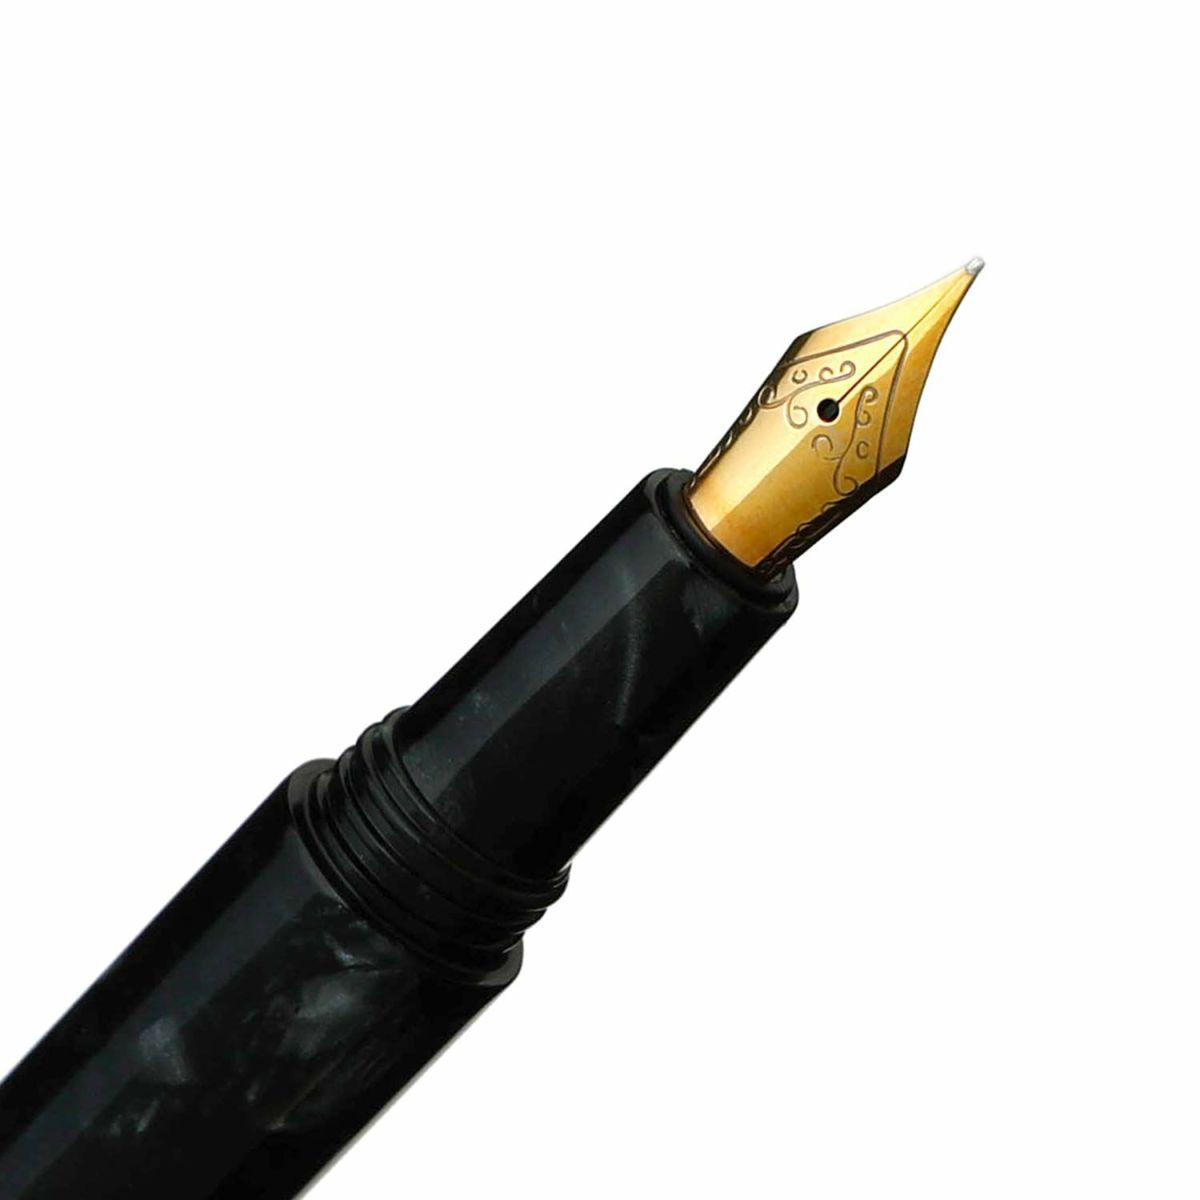 Hightide - Attache Marbled Fountain Pen (Black)